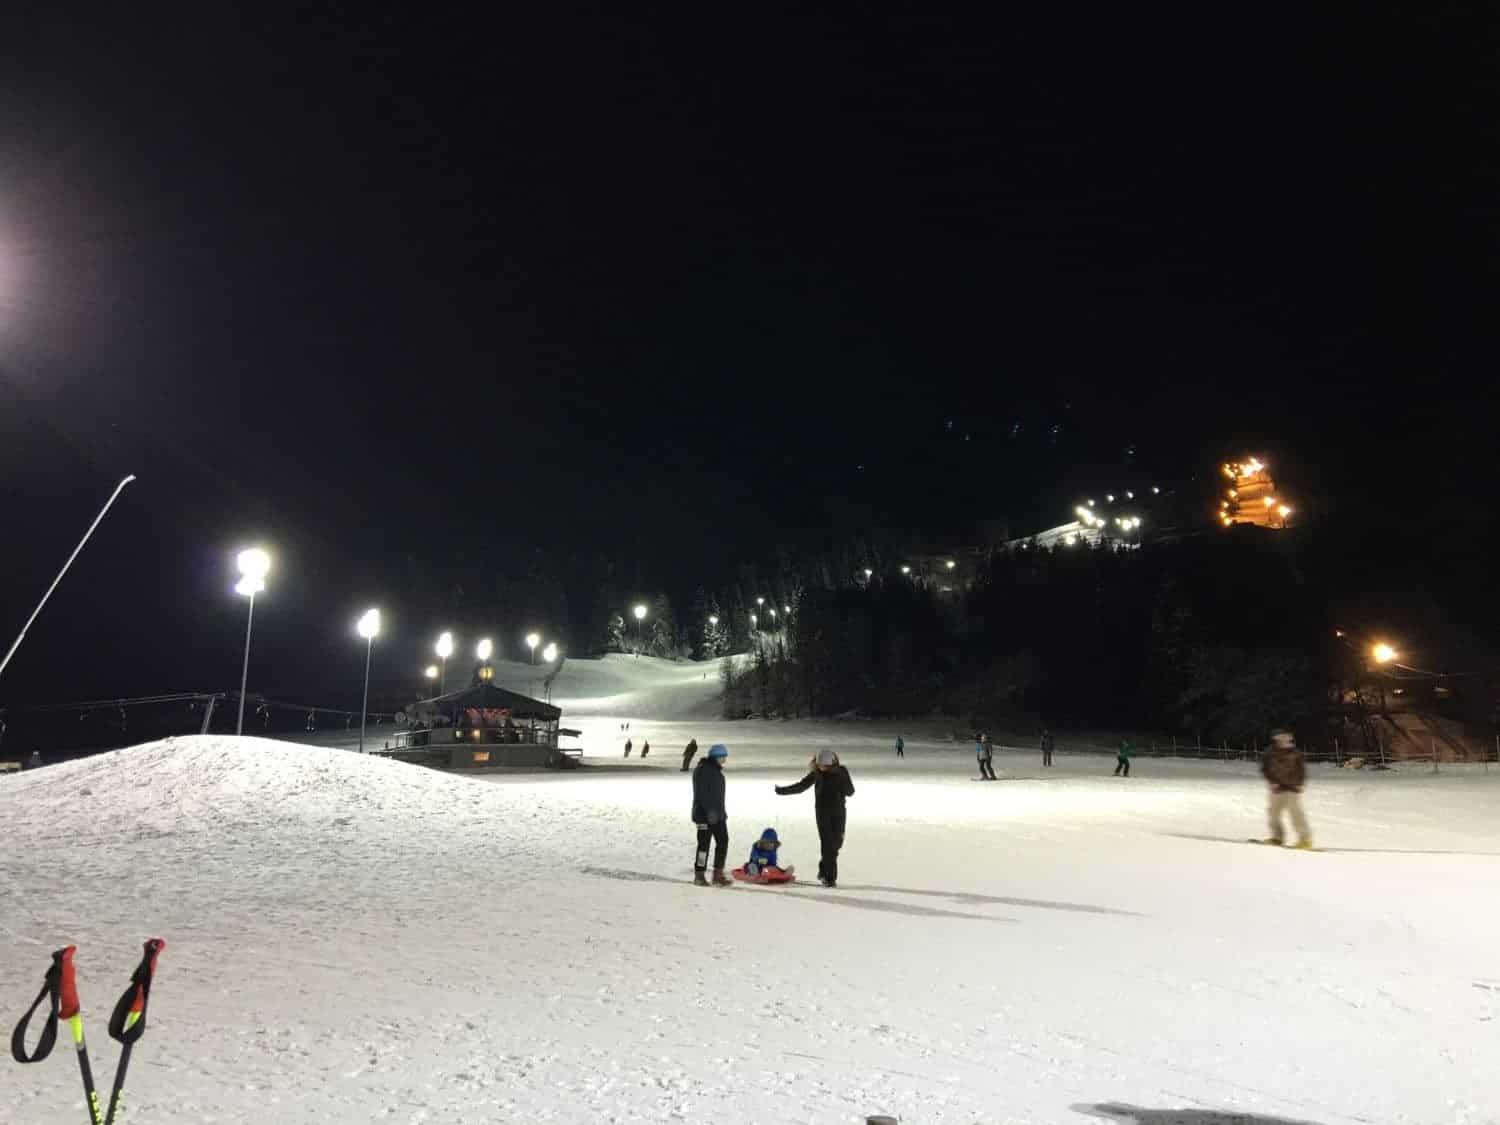 Night Skiing in Austria